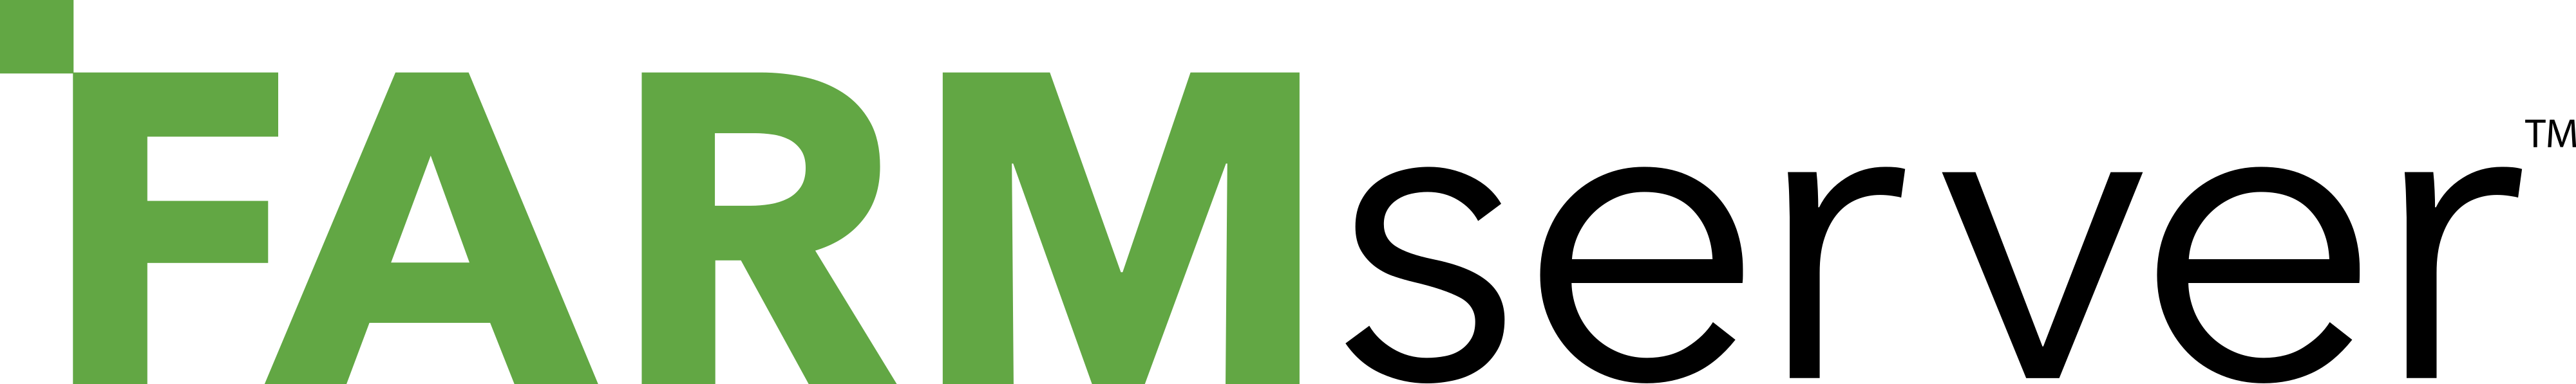 FarmServer logo - download.